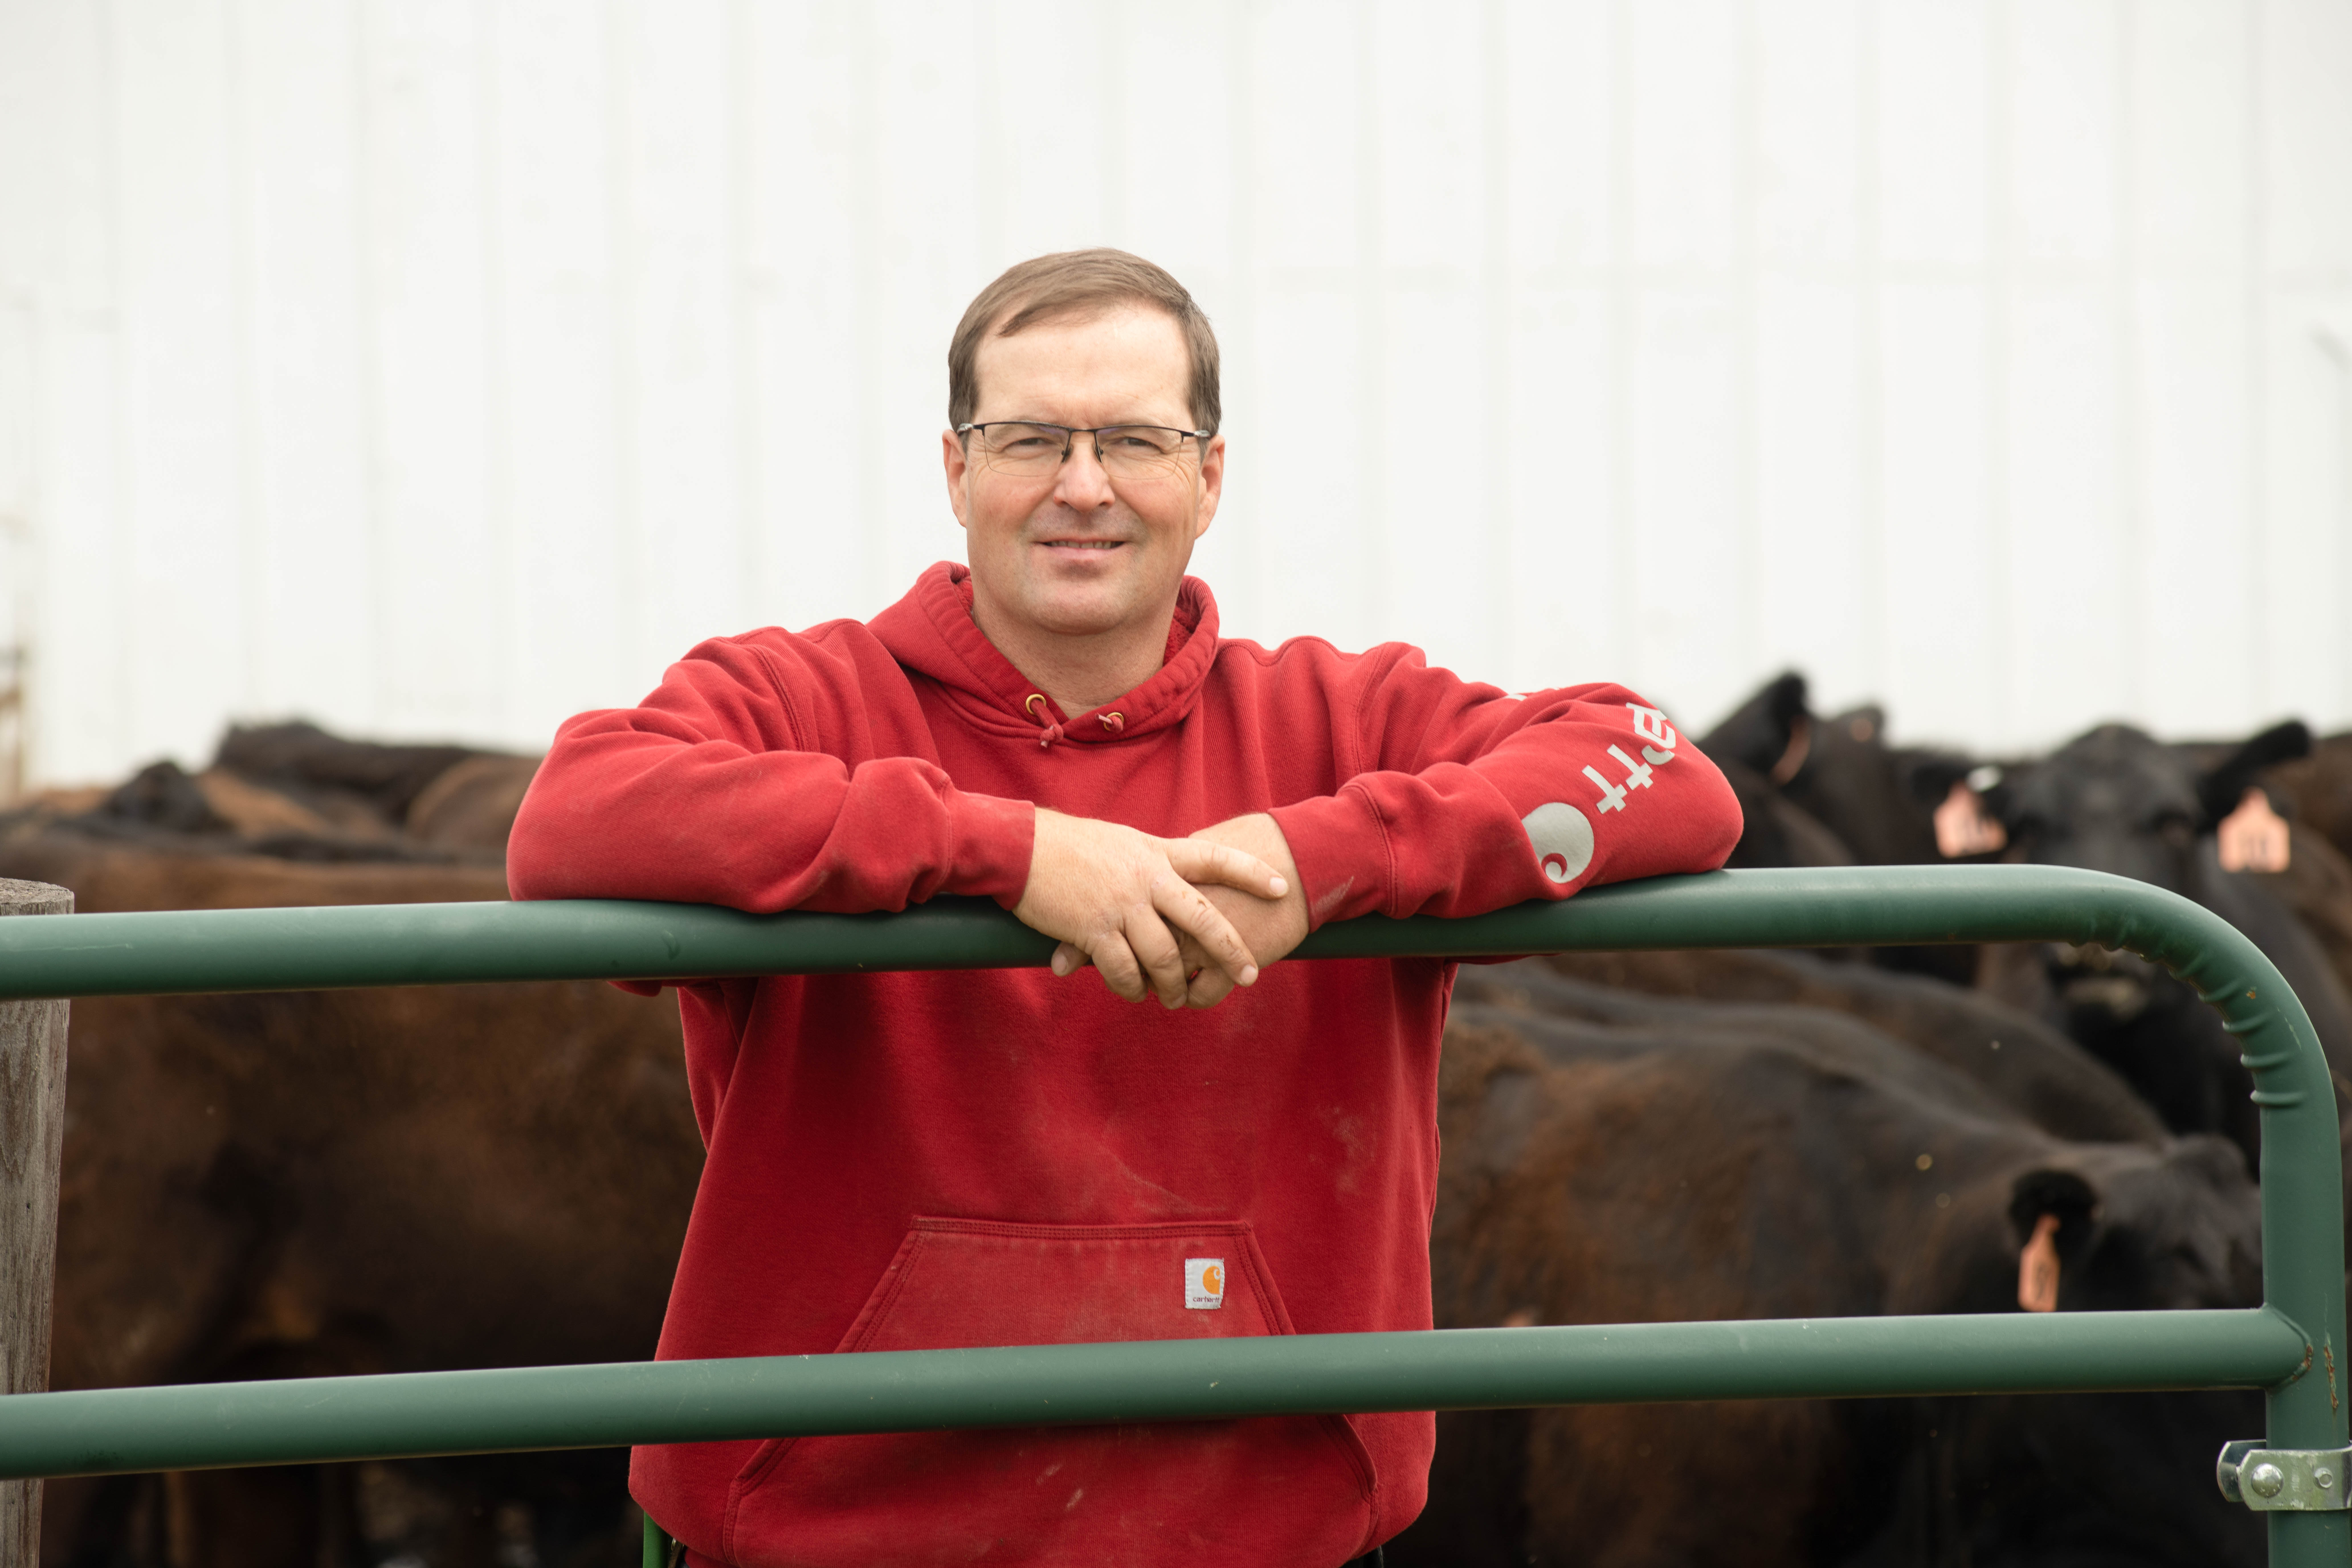 Jeff Jorgenson poses near his cattle hear